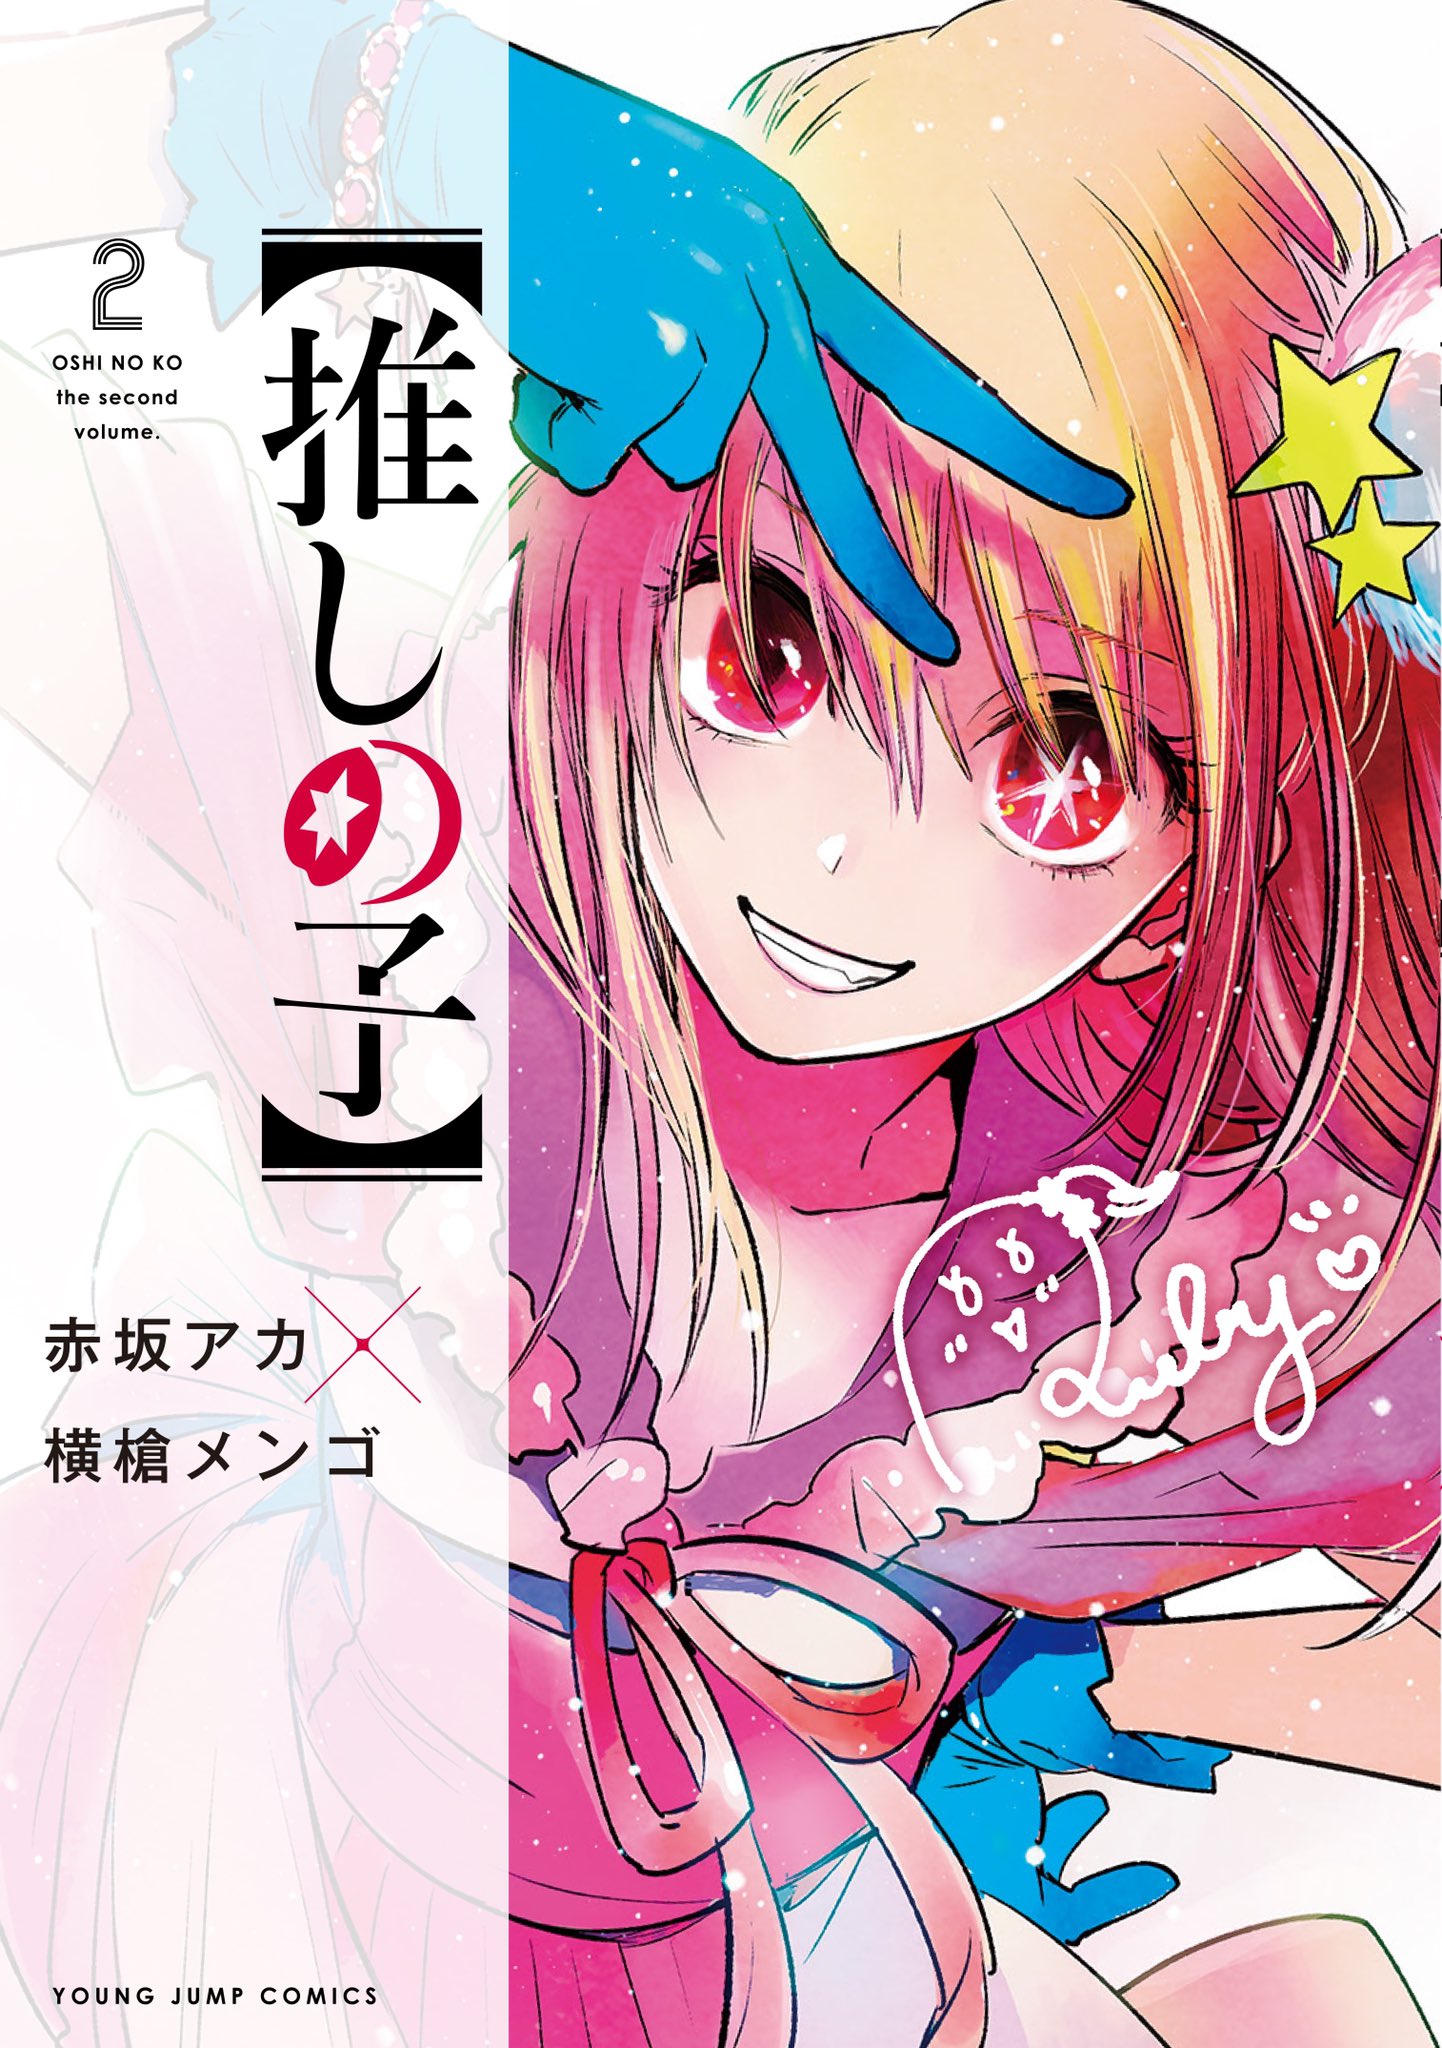 Oshi no Ko, Renai Daiko Manga Go on Break for a Month Due to Aka